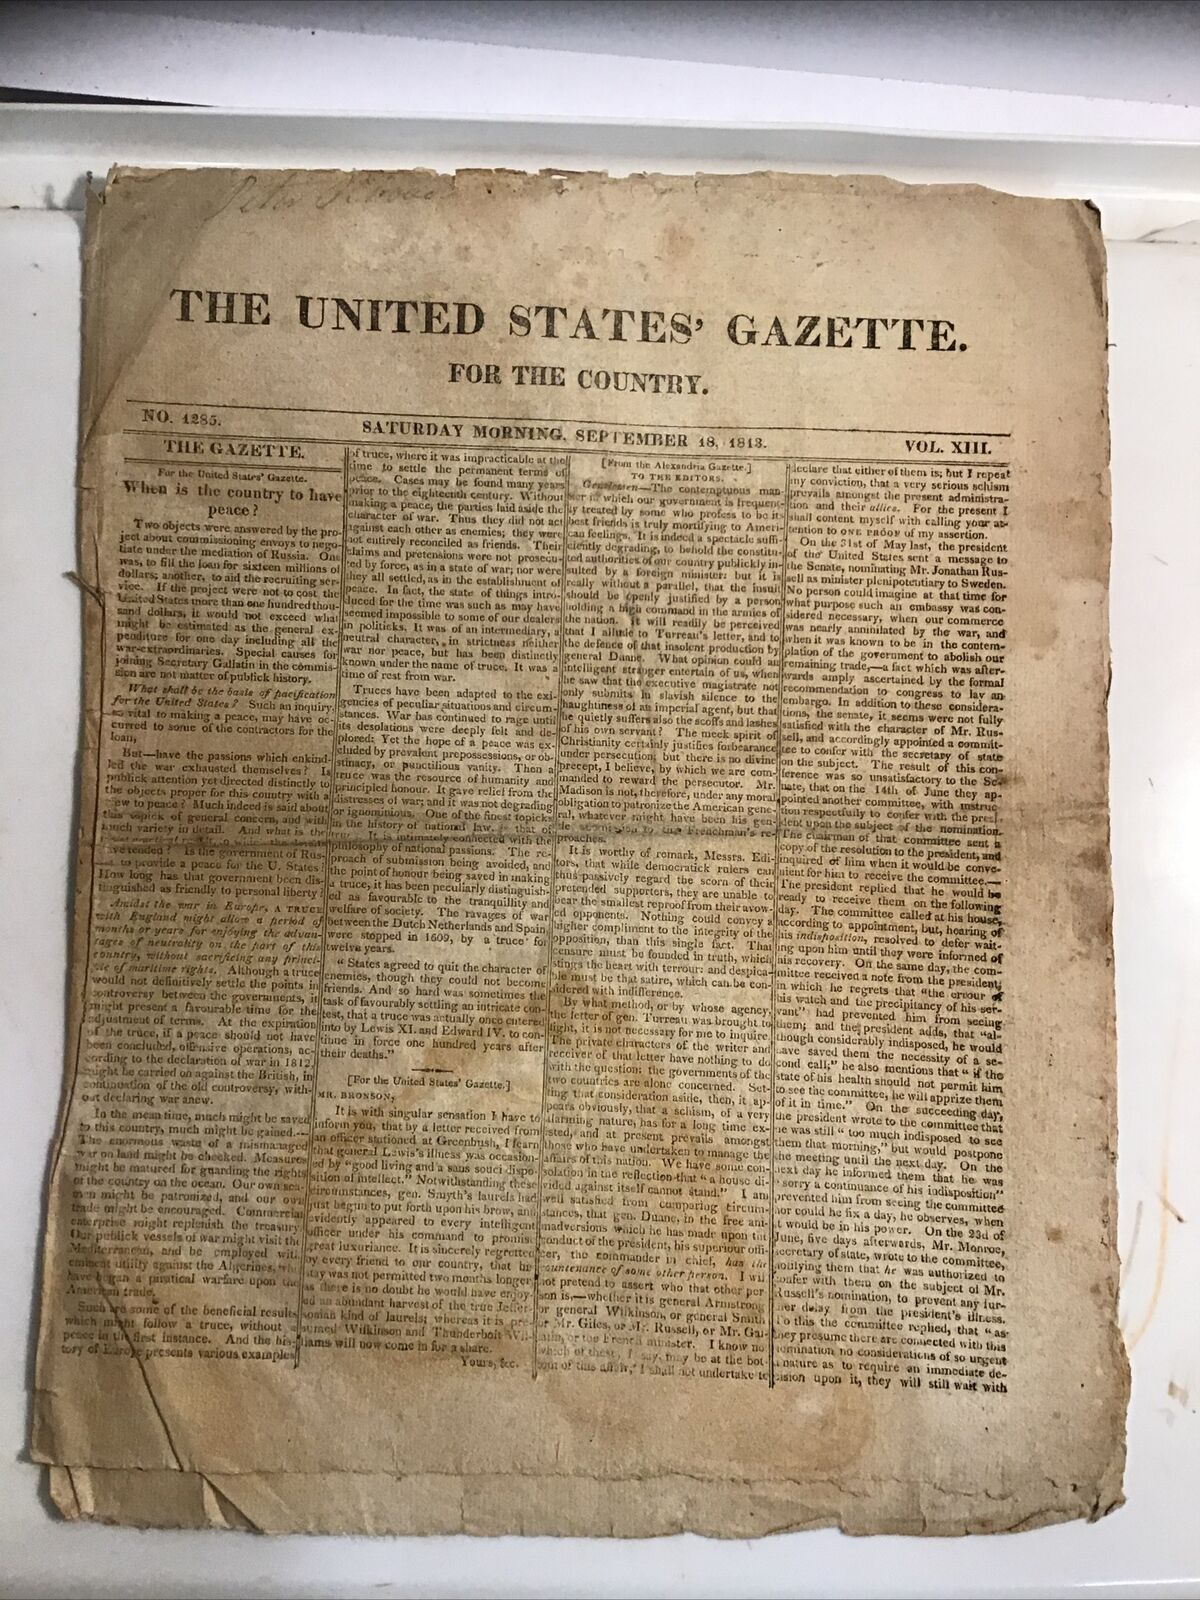 The United States Gazette Sat. Sept 18, 1813 Vol. XIII for (Judge) Peter Rhoads